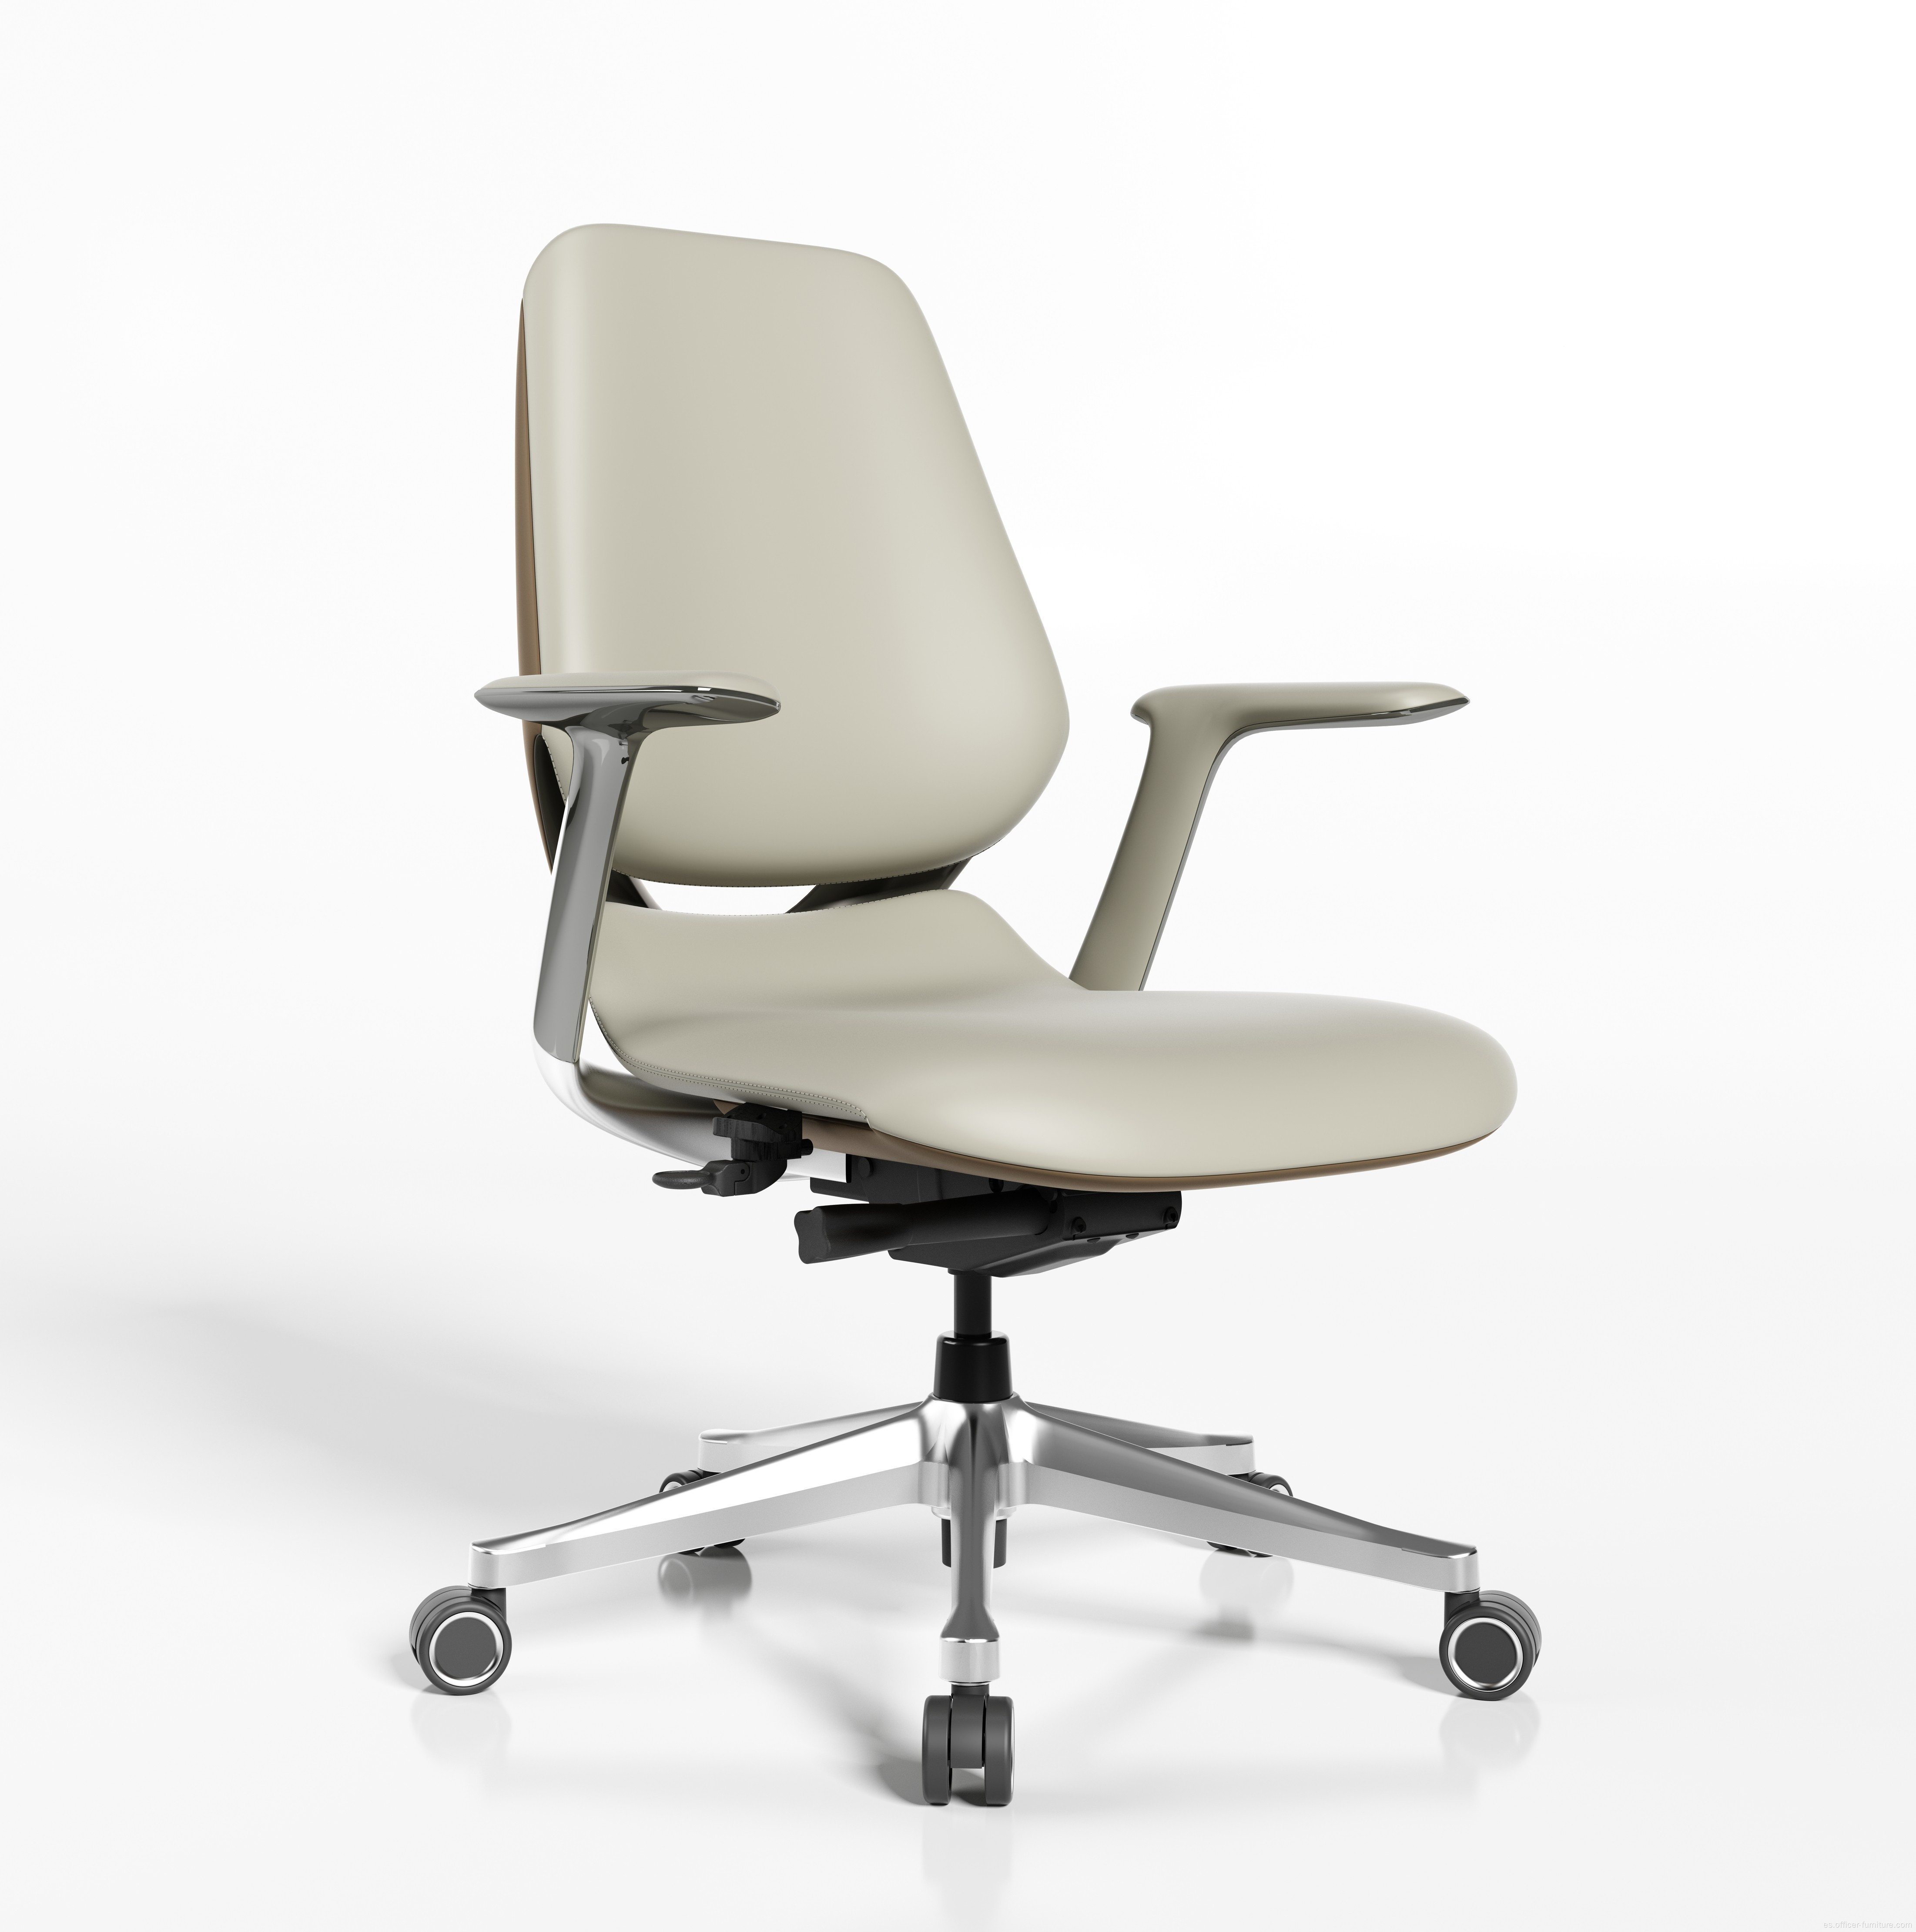 Nuevo marco de aleación de aluminio silla de oficina ergonómica